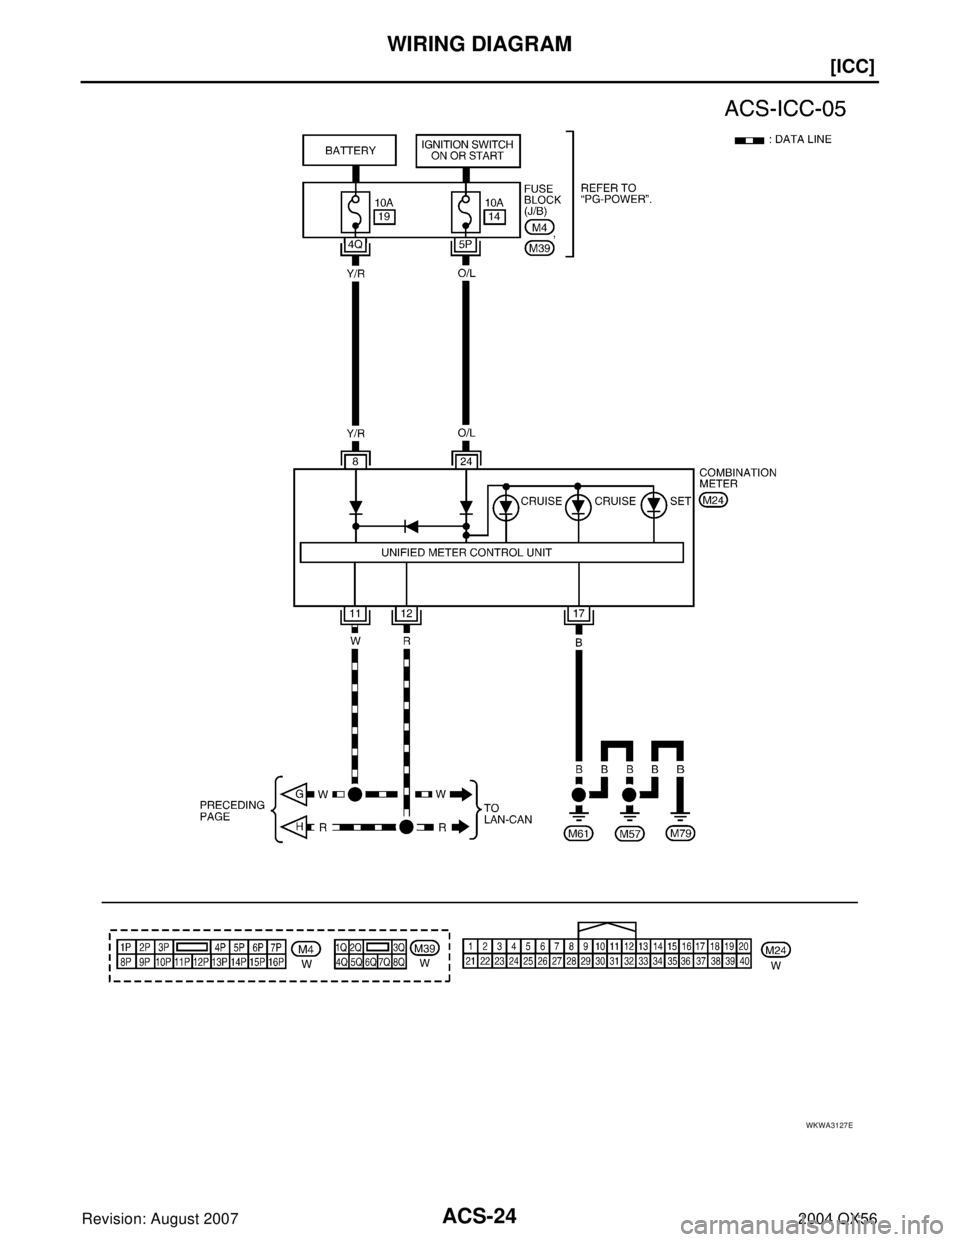 INFINITI QX56 2004  Factory Service Manual ACS-24
[ICC]
WIRING DIAGRAM
Revision: August 20072004 QX56
WKWA3127E 